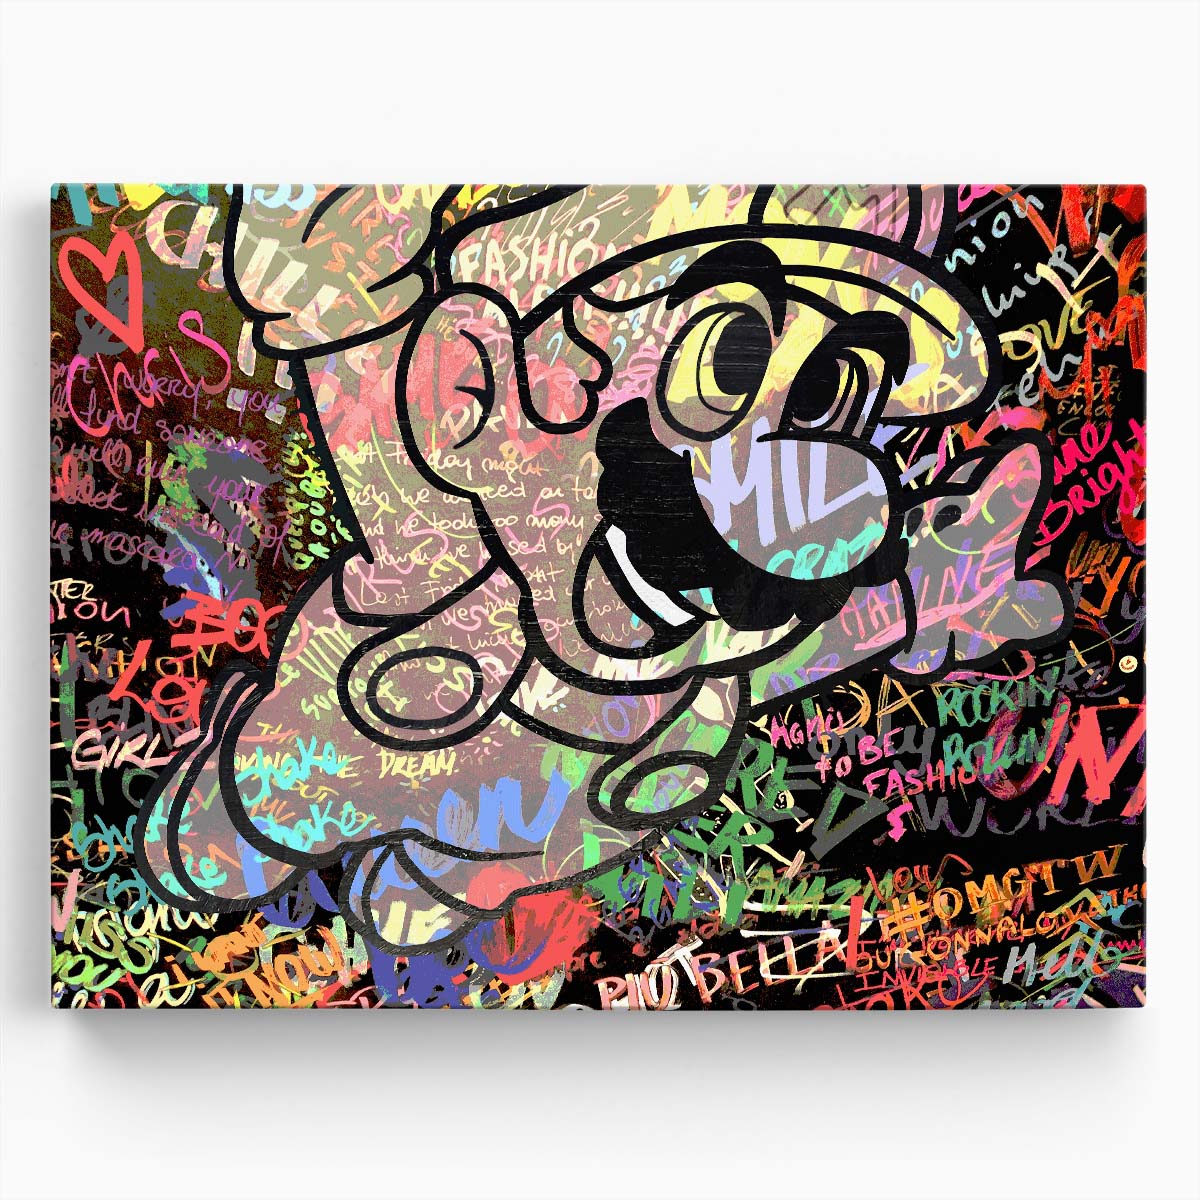 Super Mario Bros Graffiti Wall Art by Luxuriance Designs. Made in USA.